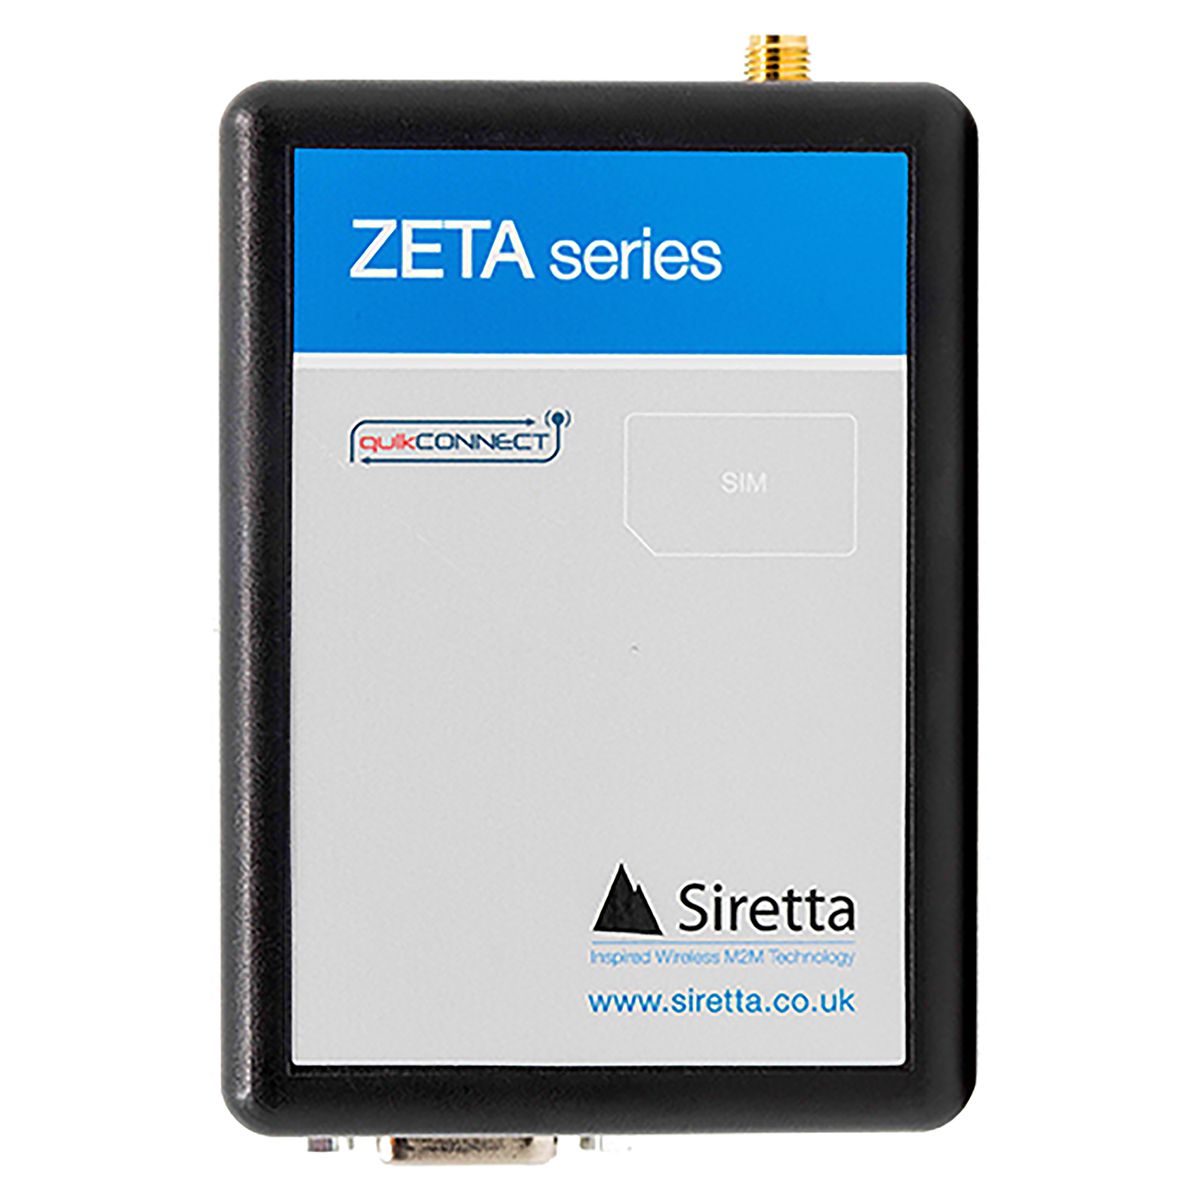 Siretta GSM & GPRS Modem ZETA-N-LTE(EU), 1800 (GSM, GPRS) MHz, 900 (GSM, GPRS) MHz, RJ12, RS232, SIM Card, SMA Antenna